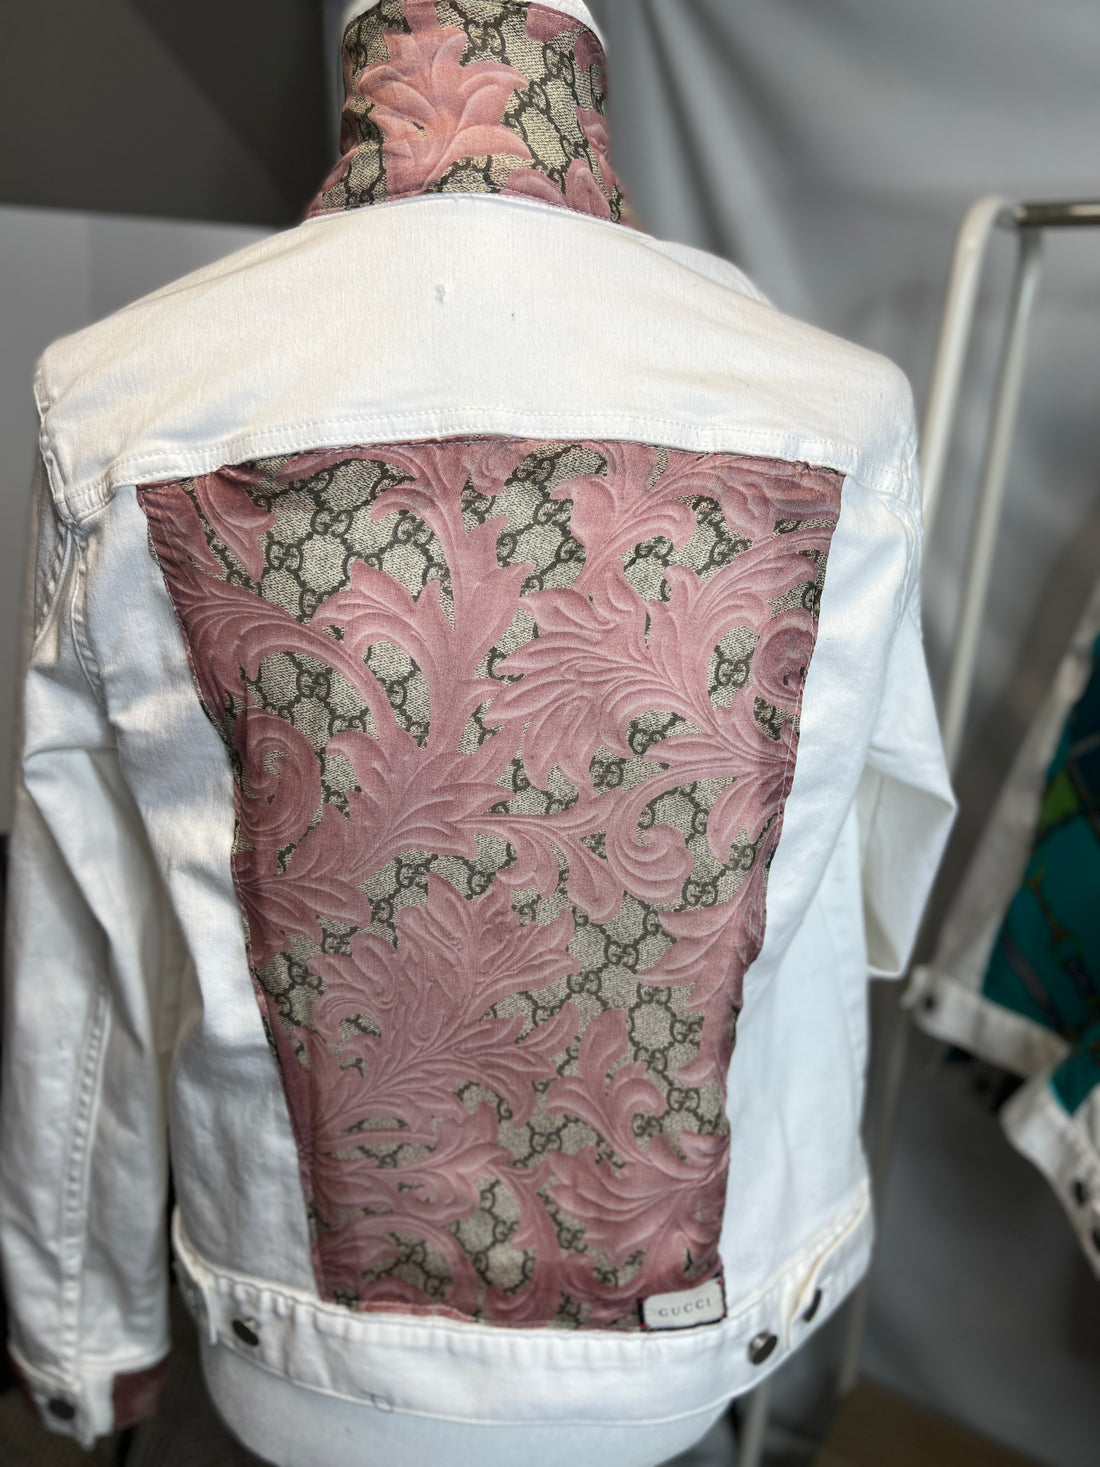 Jilli Inc Designer Denim Scarf Jackets Gucci Vintage Floral / Small